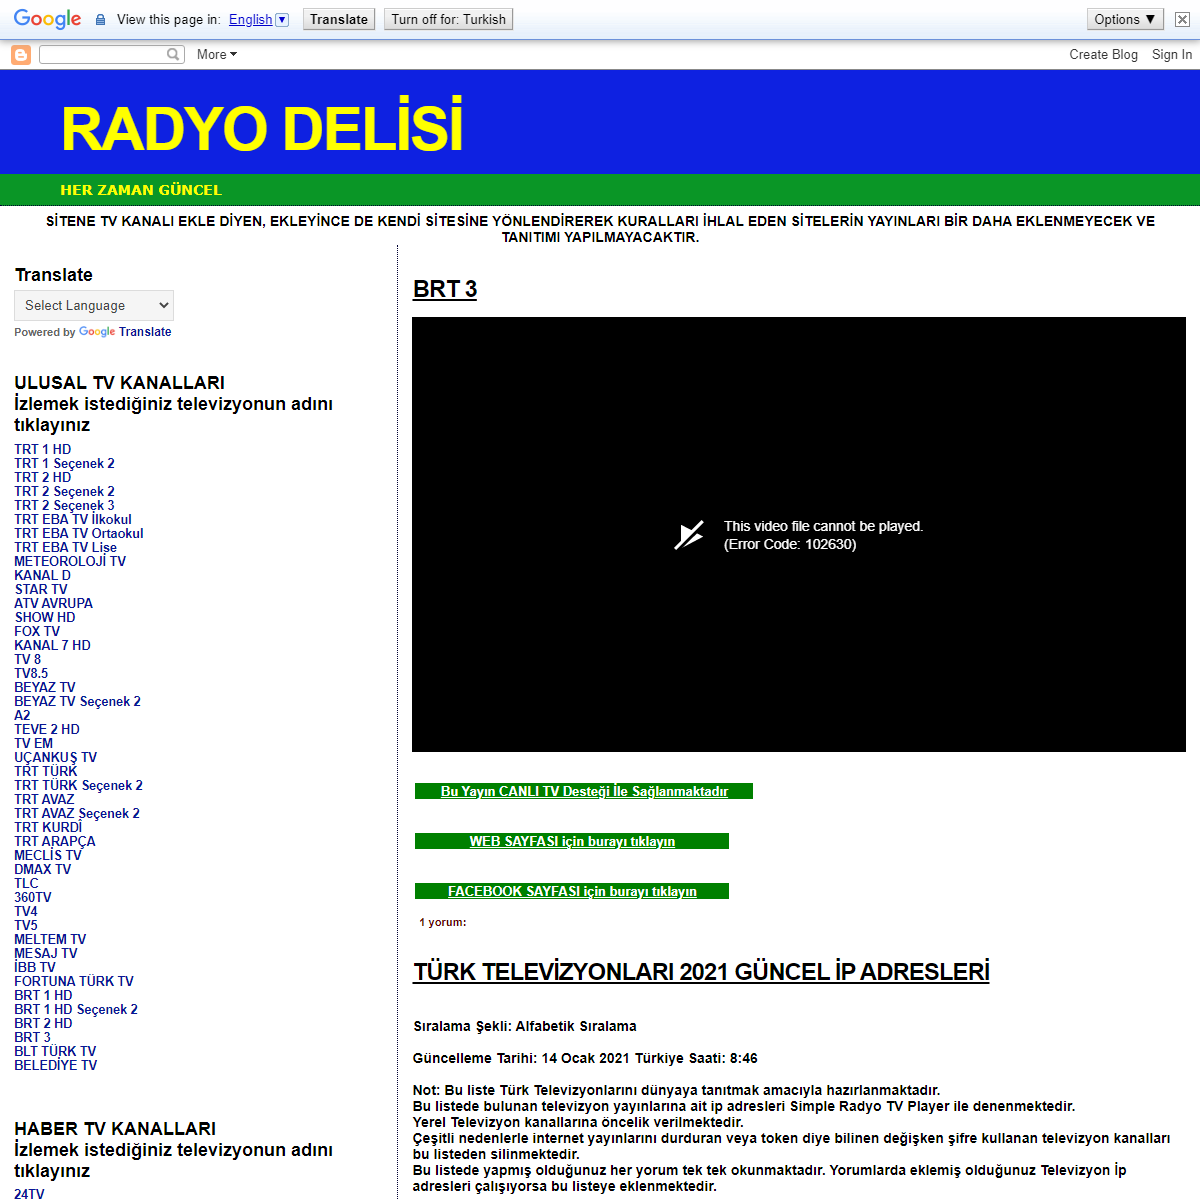 A complete backup of https://radyodelisi.blogspot.com/2019/01/